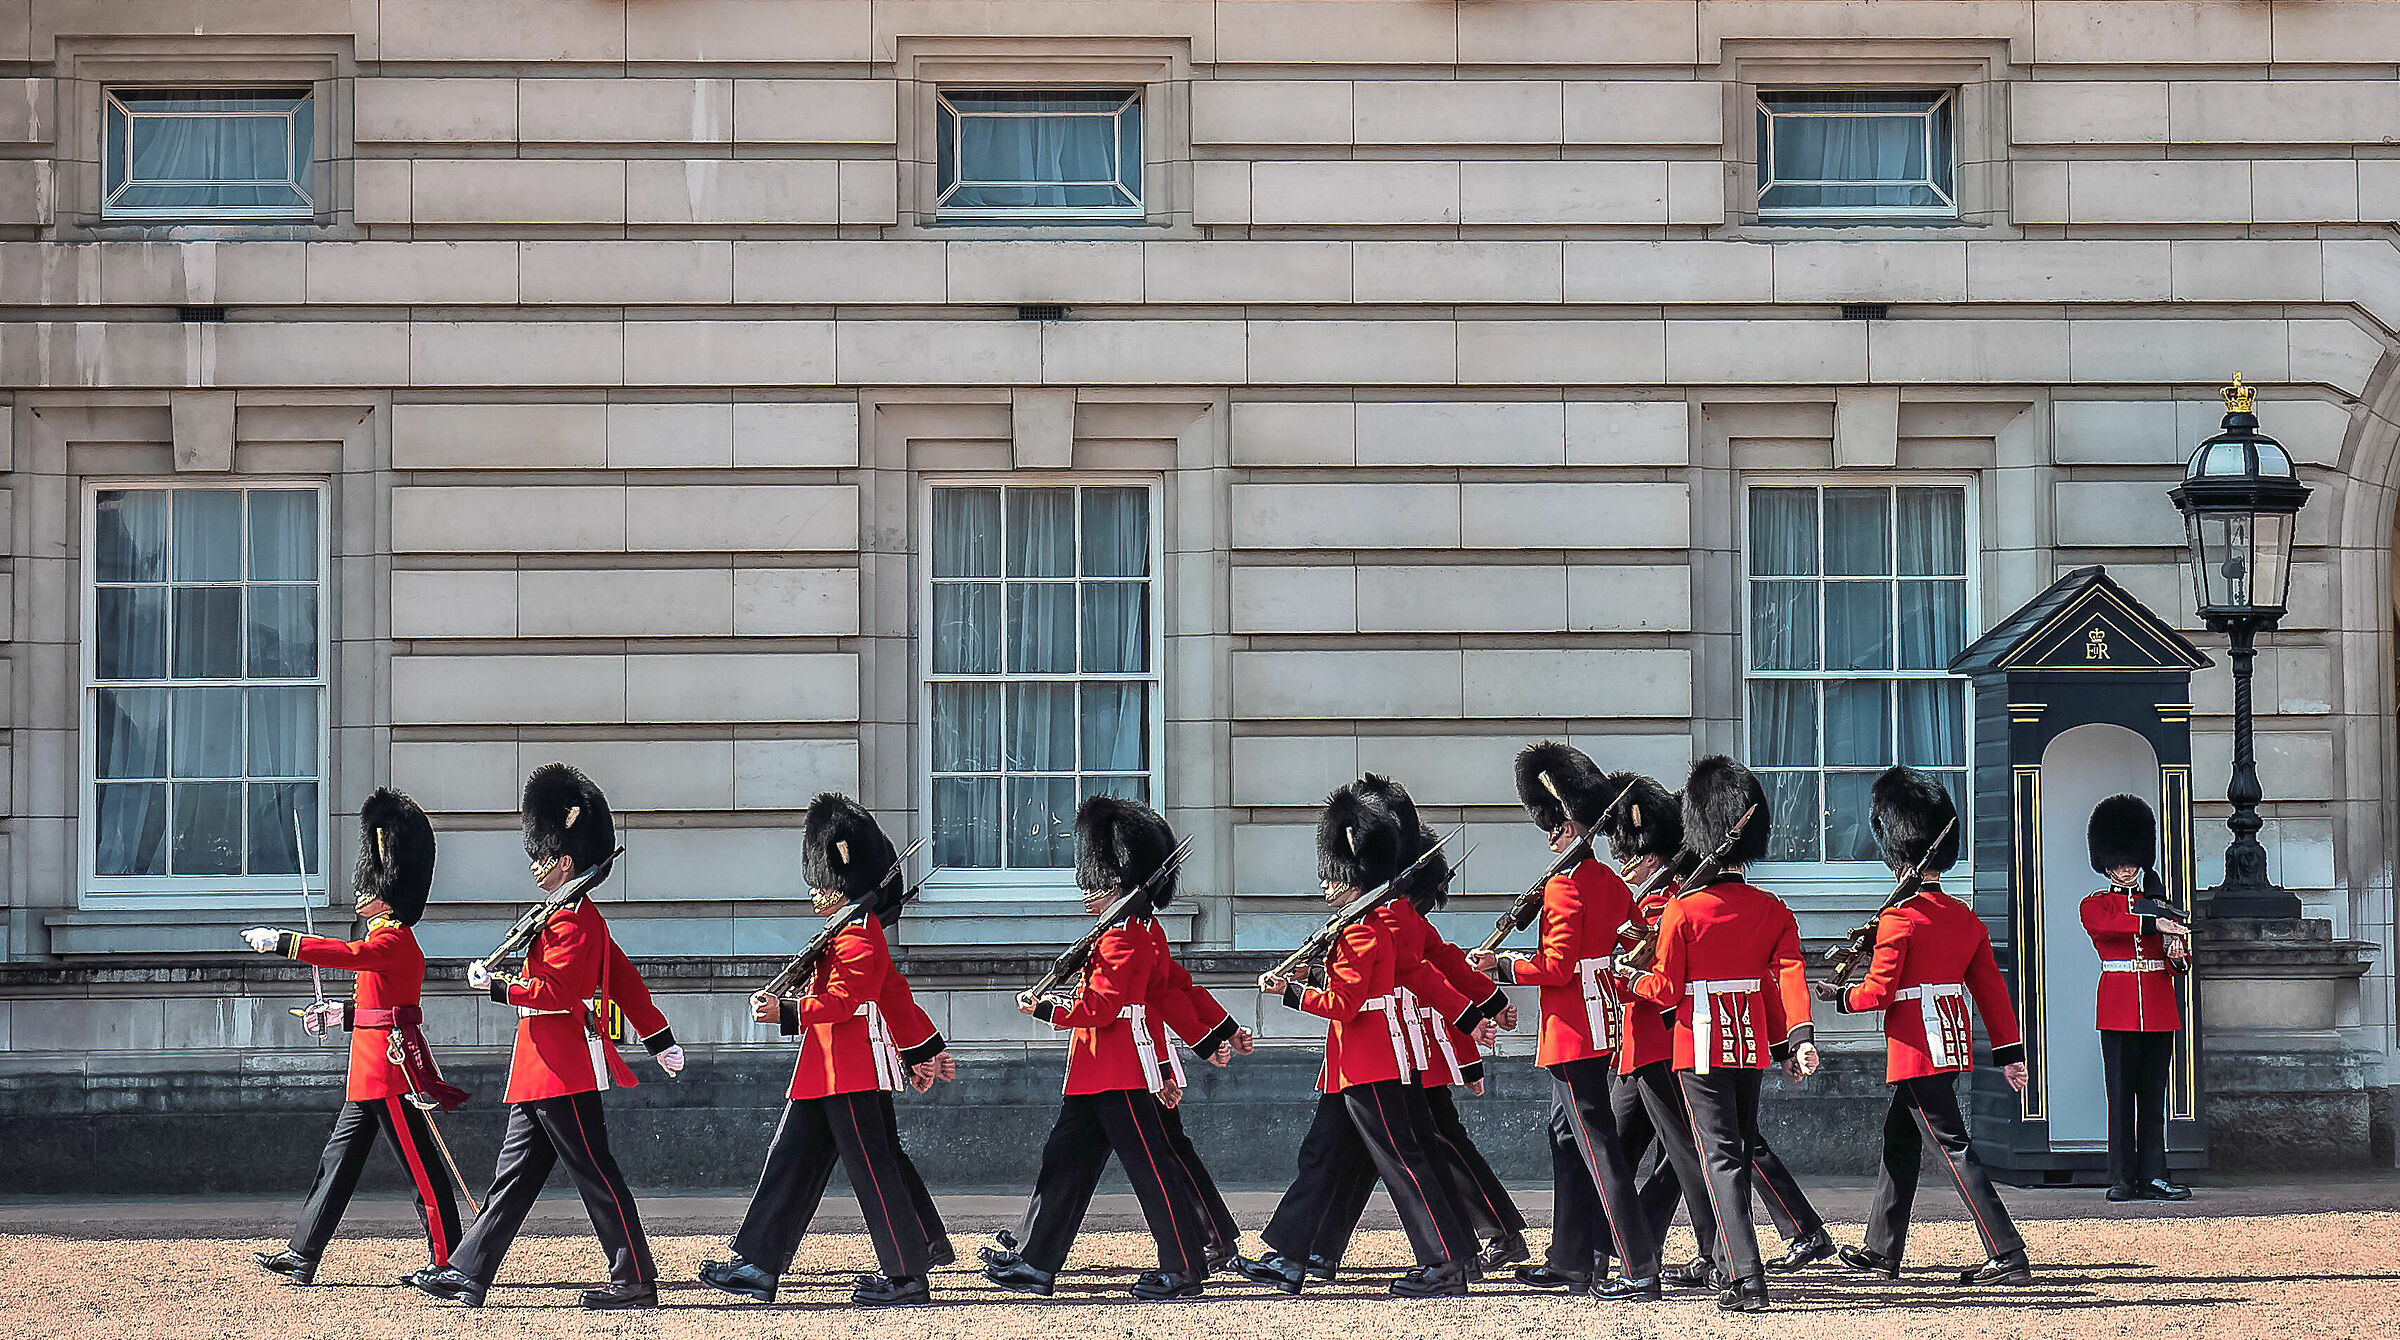 Buckingham Palace-Change of the guard...